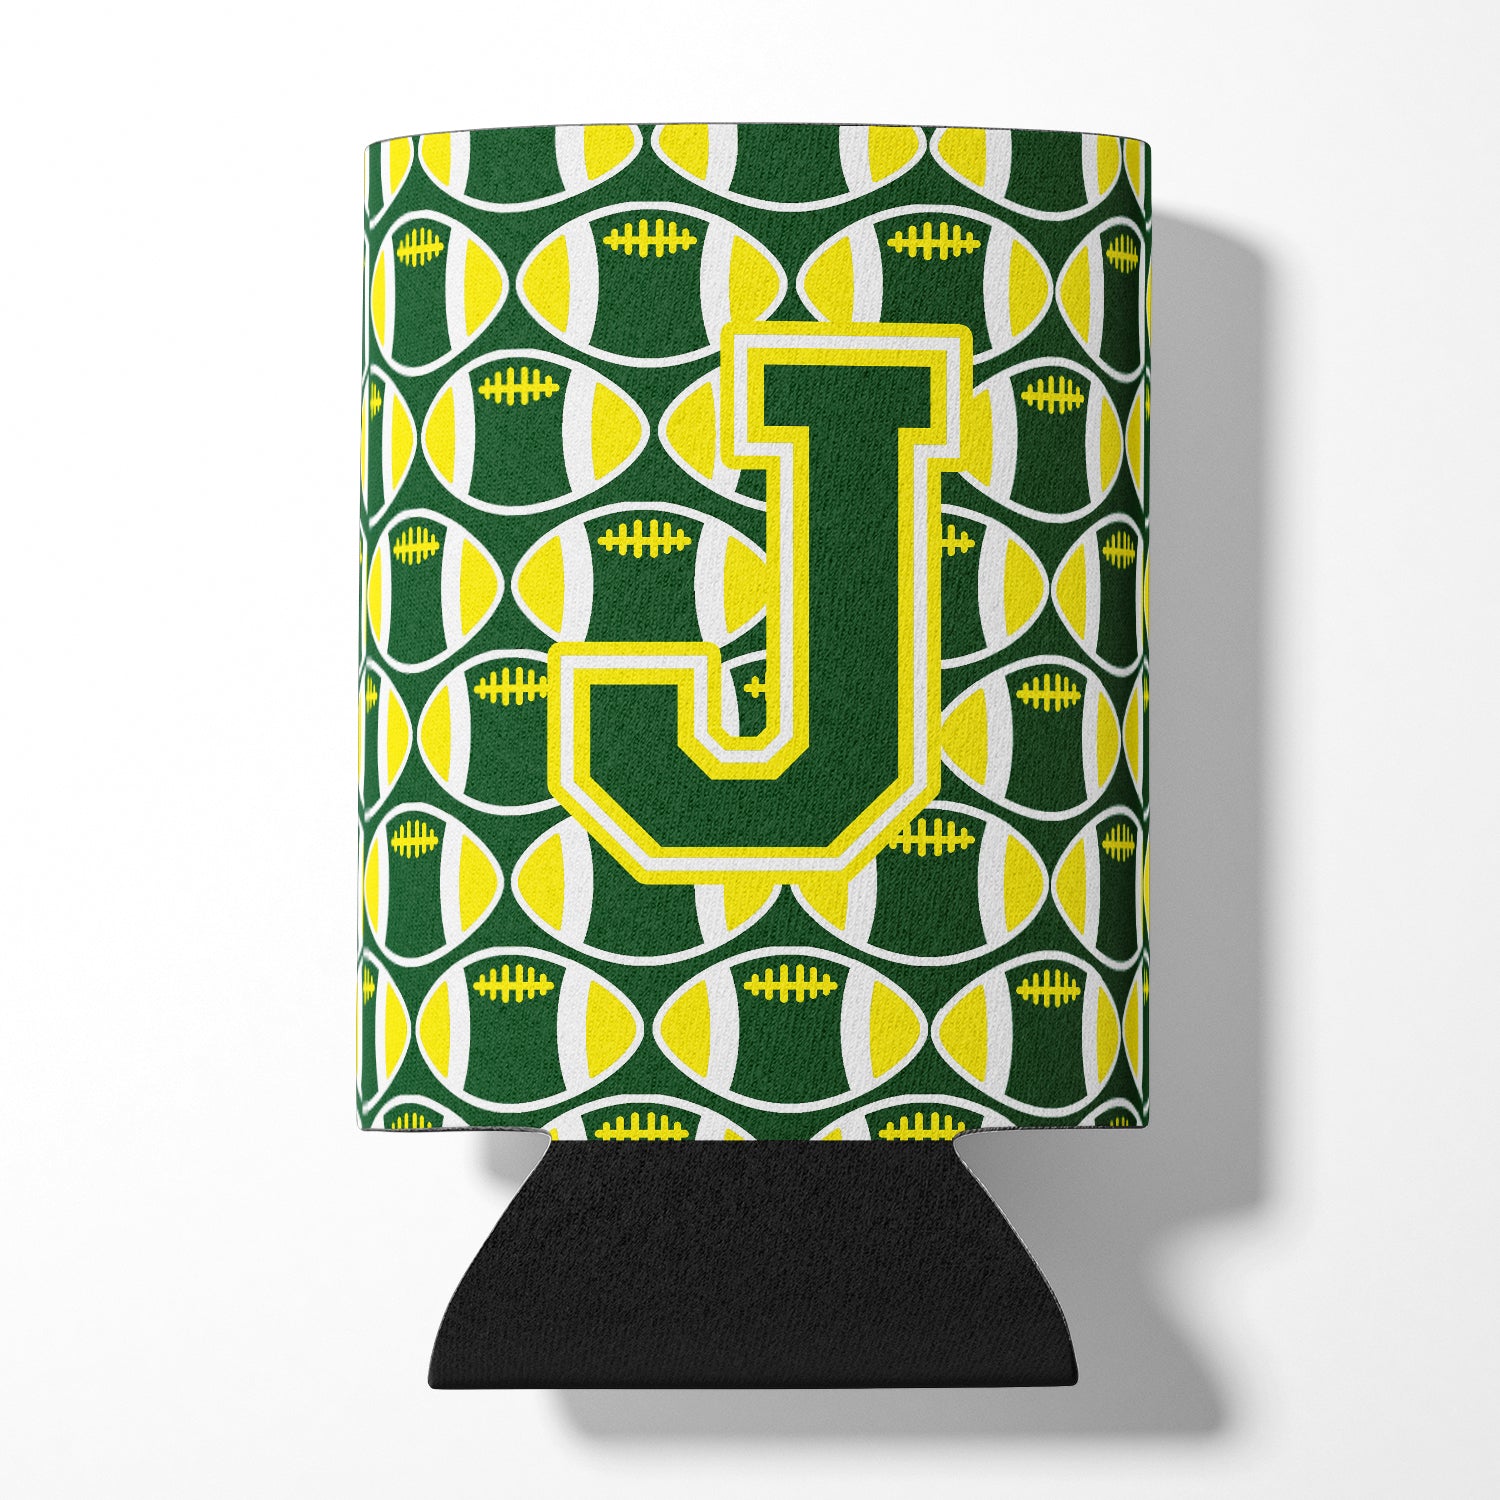 Letter J Football Green and Yellow Can or Bottle Hugger CJ1075-JCC